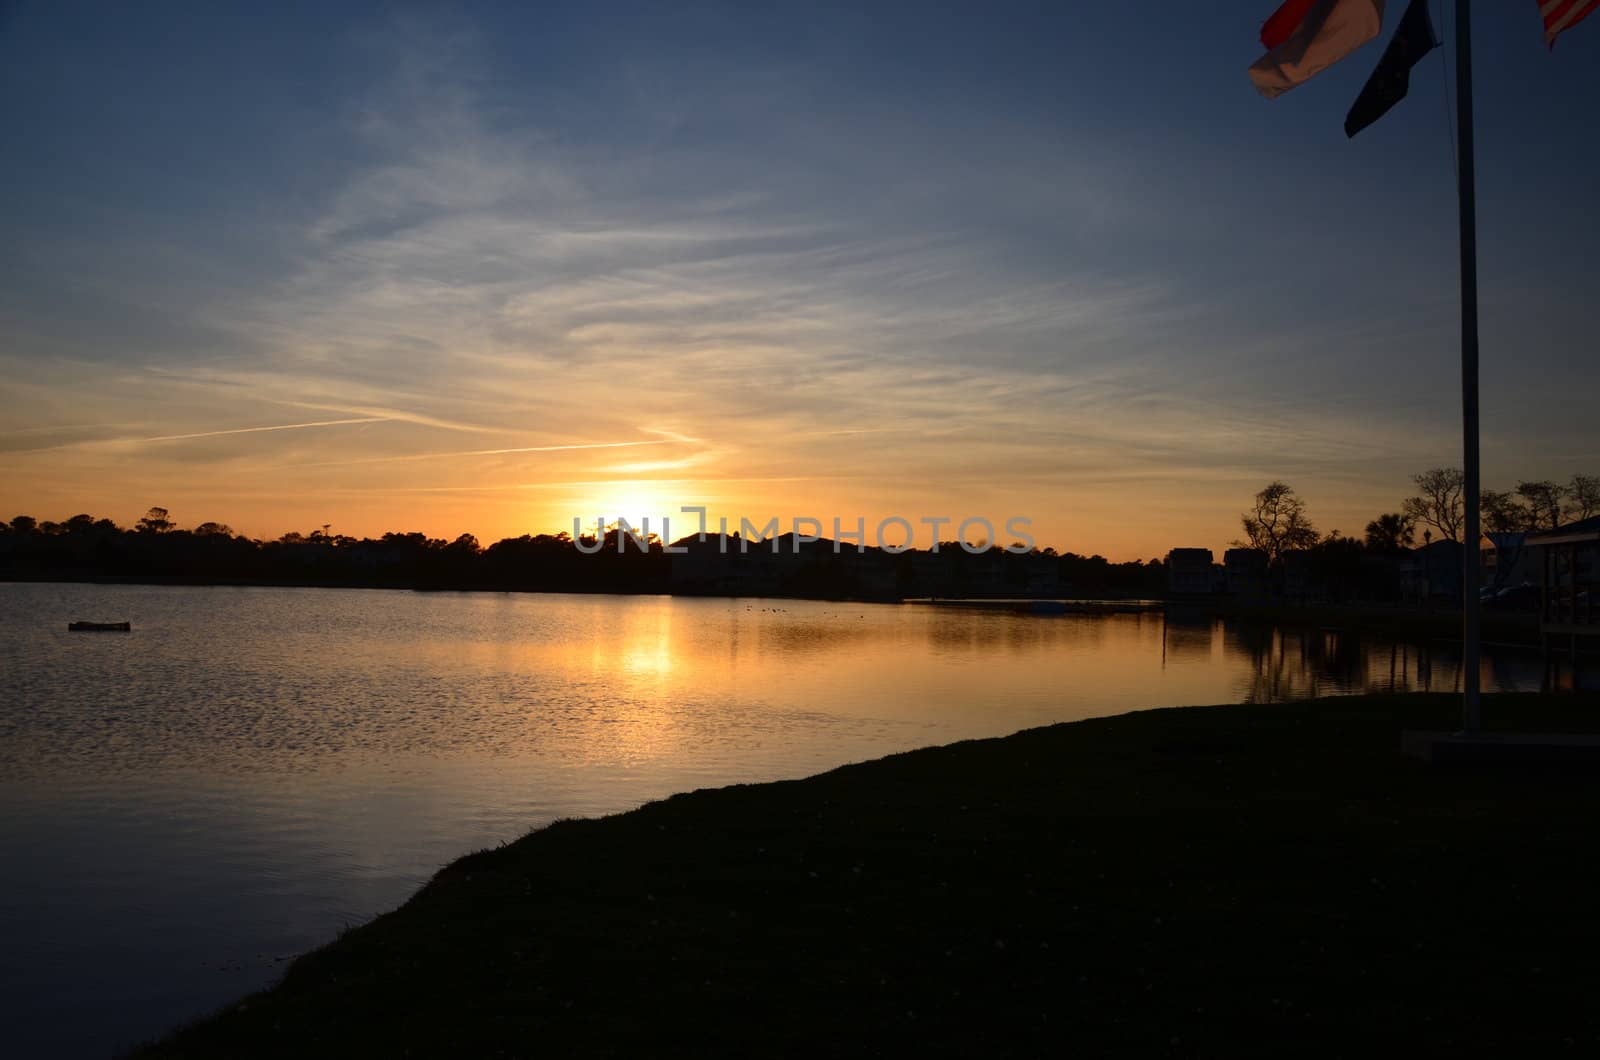 A sunset over carolina lake in North Carolina